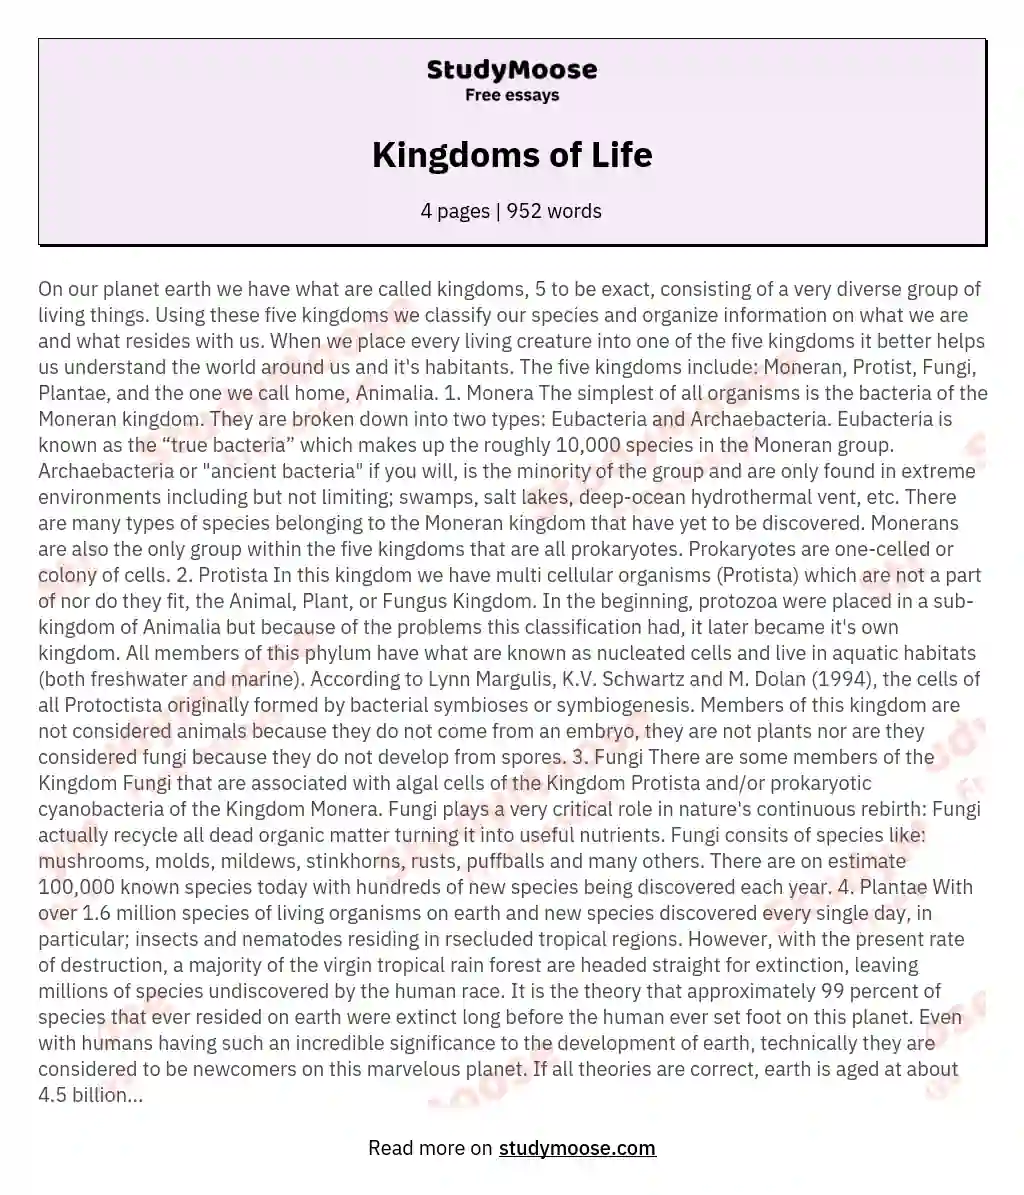 Kingdoms of Life essay